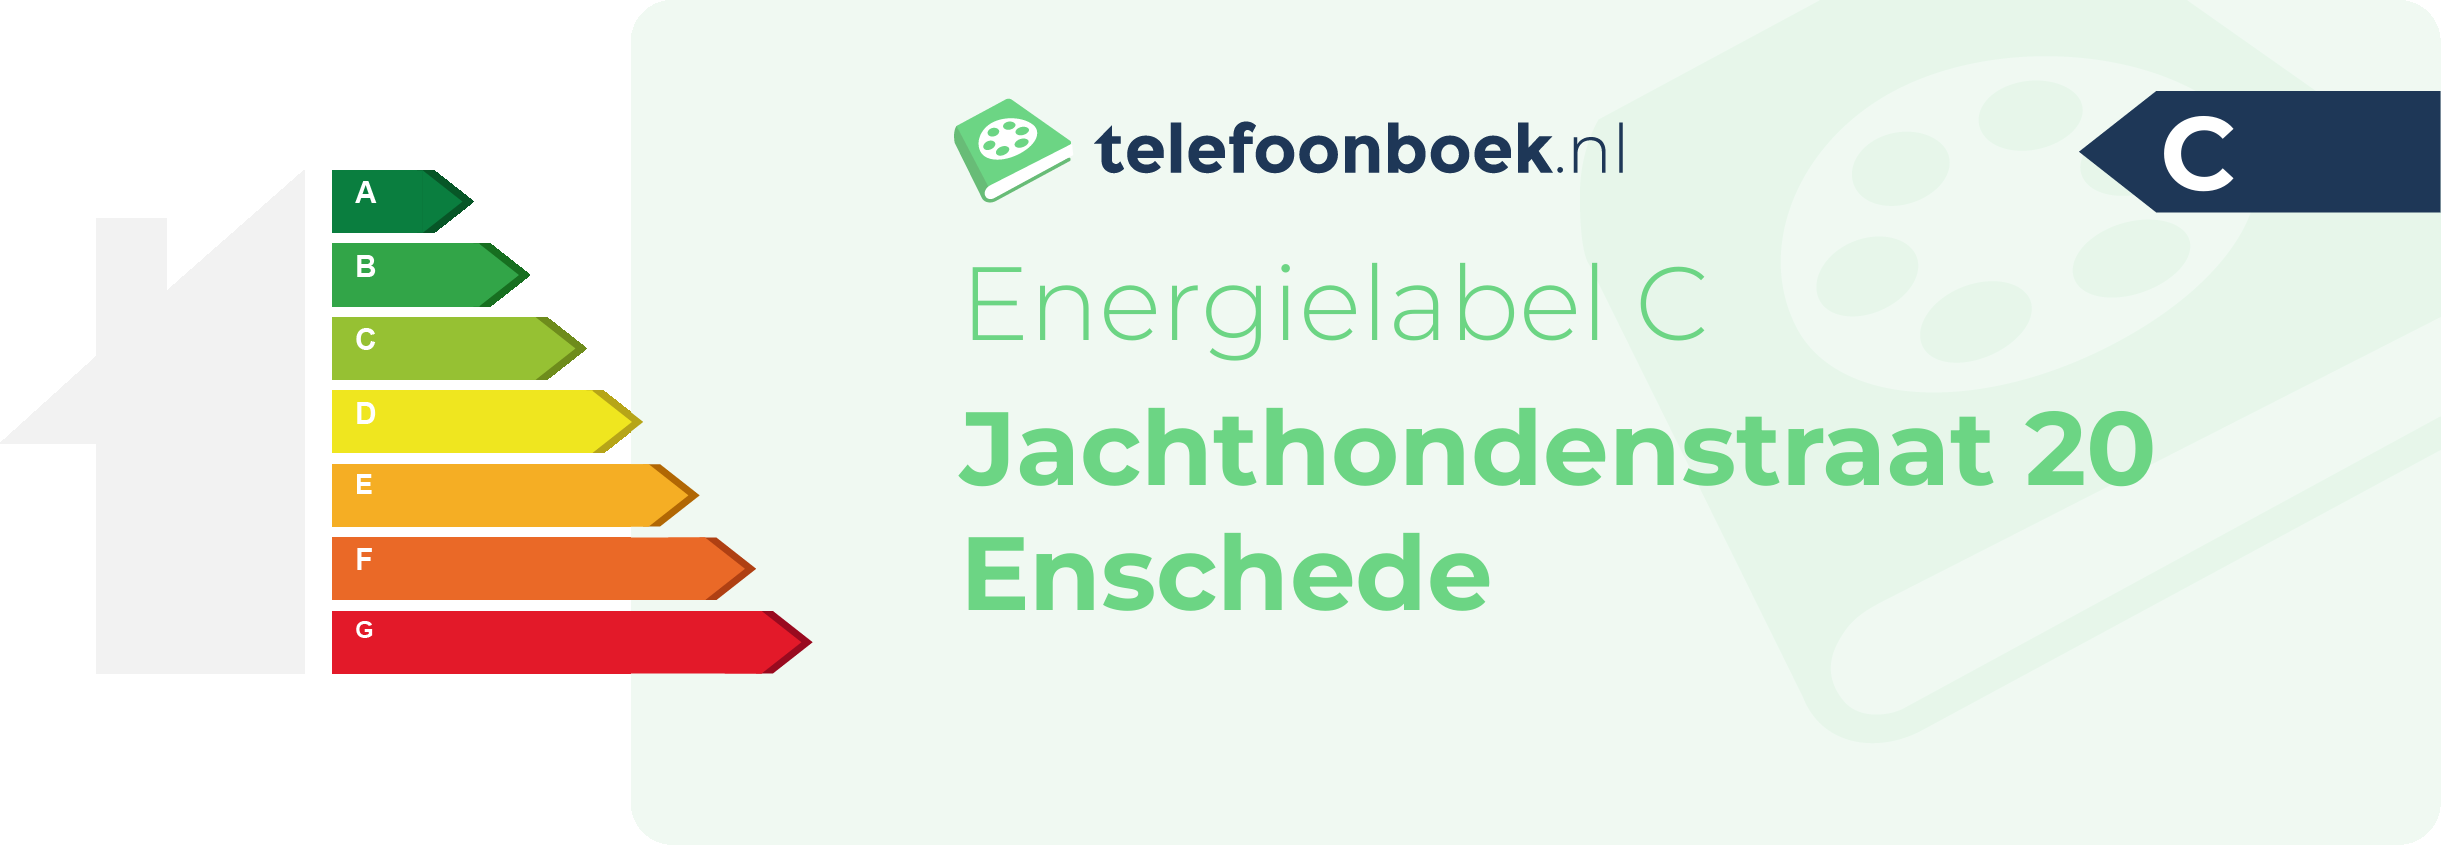 Energielabel Jachthondenstraat 20 Enschede